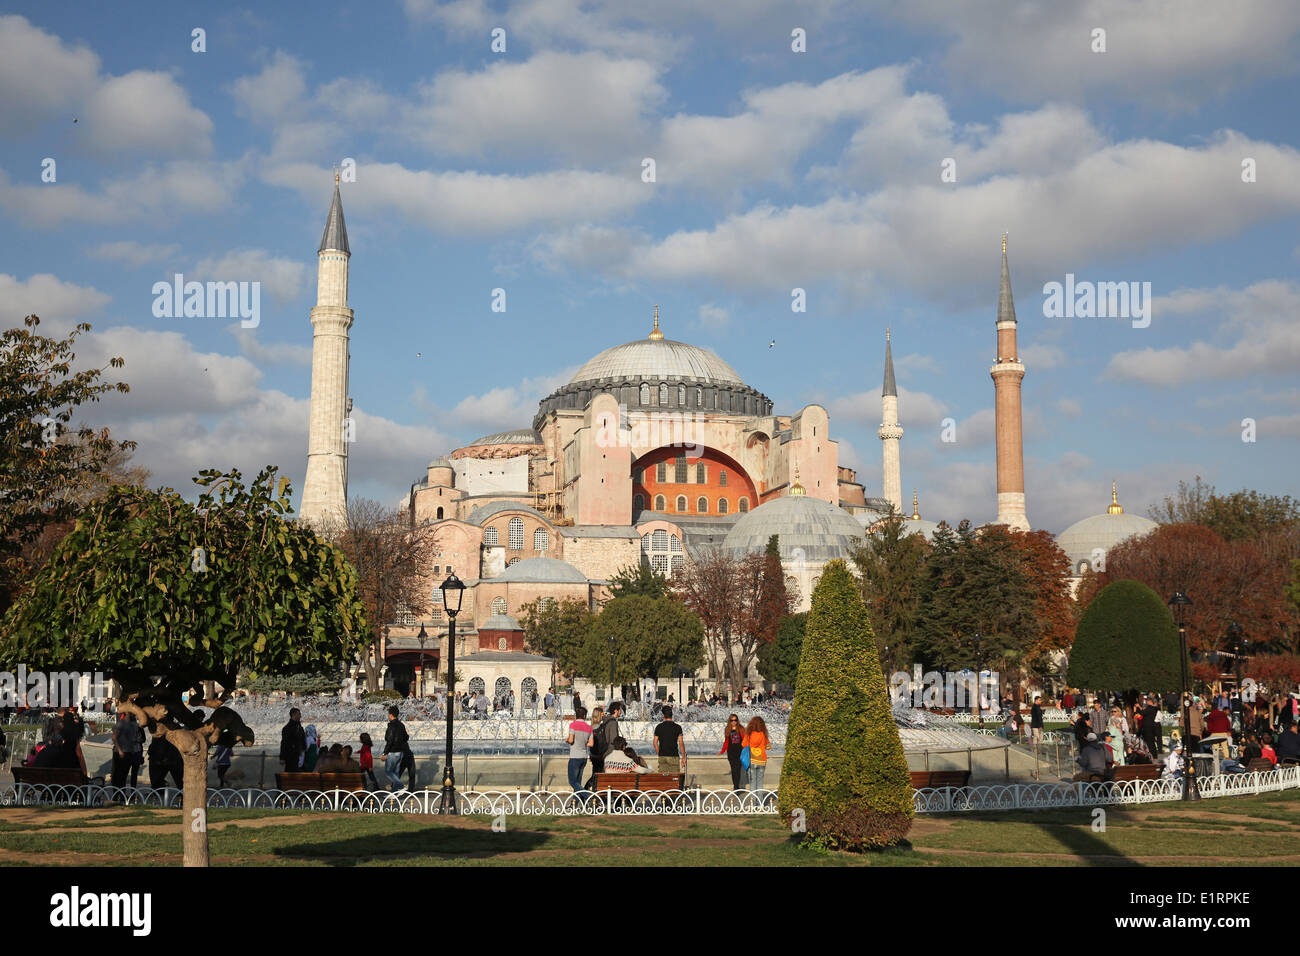 The Hagia Sophia, also called Aya Sophia, in Istanbul, Turkey Stock Photo